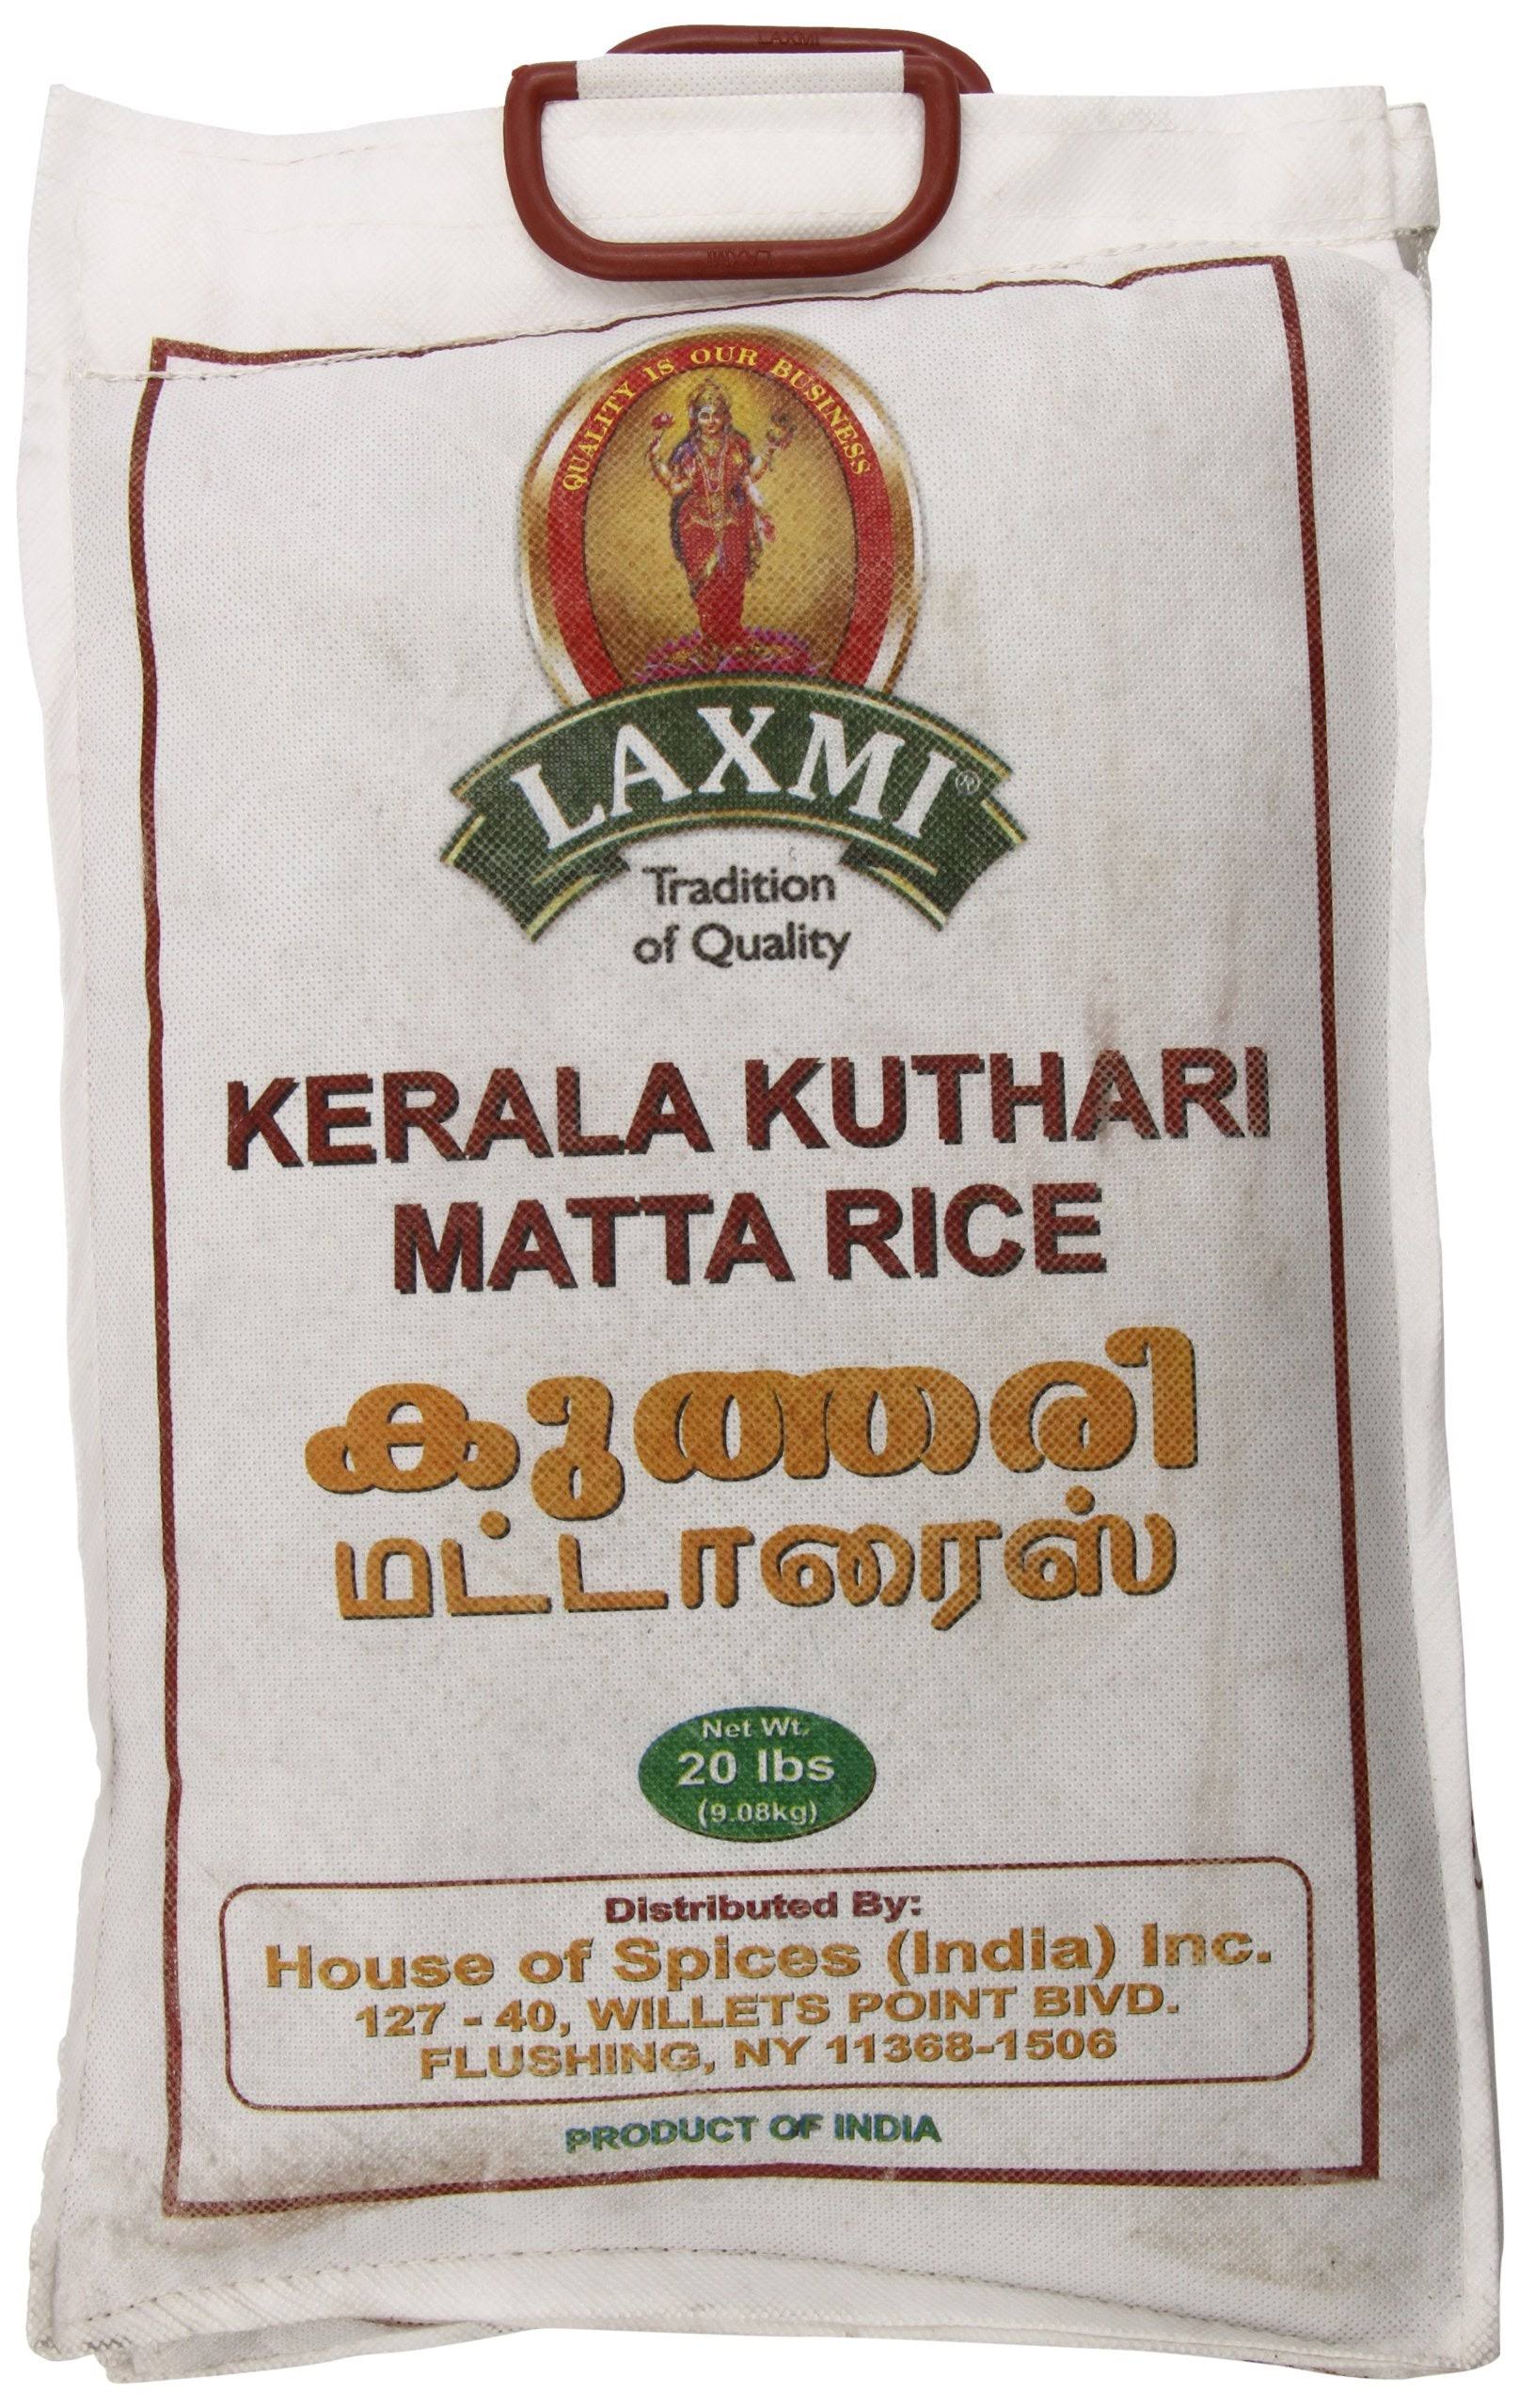 Laxmi Kerala Kuthari Rice - 20lbs